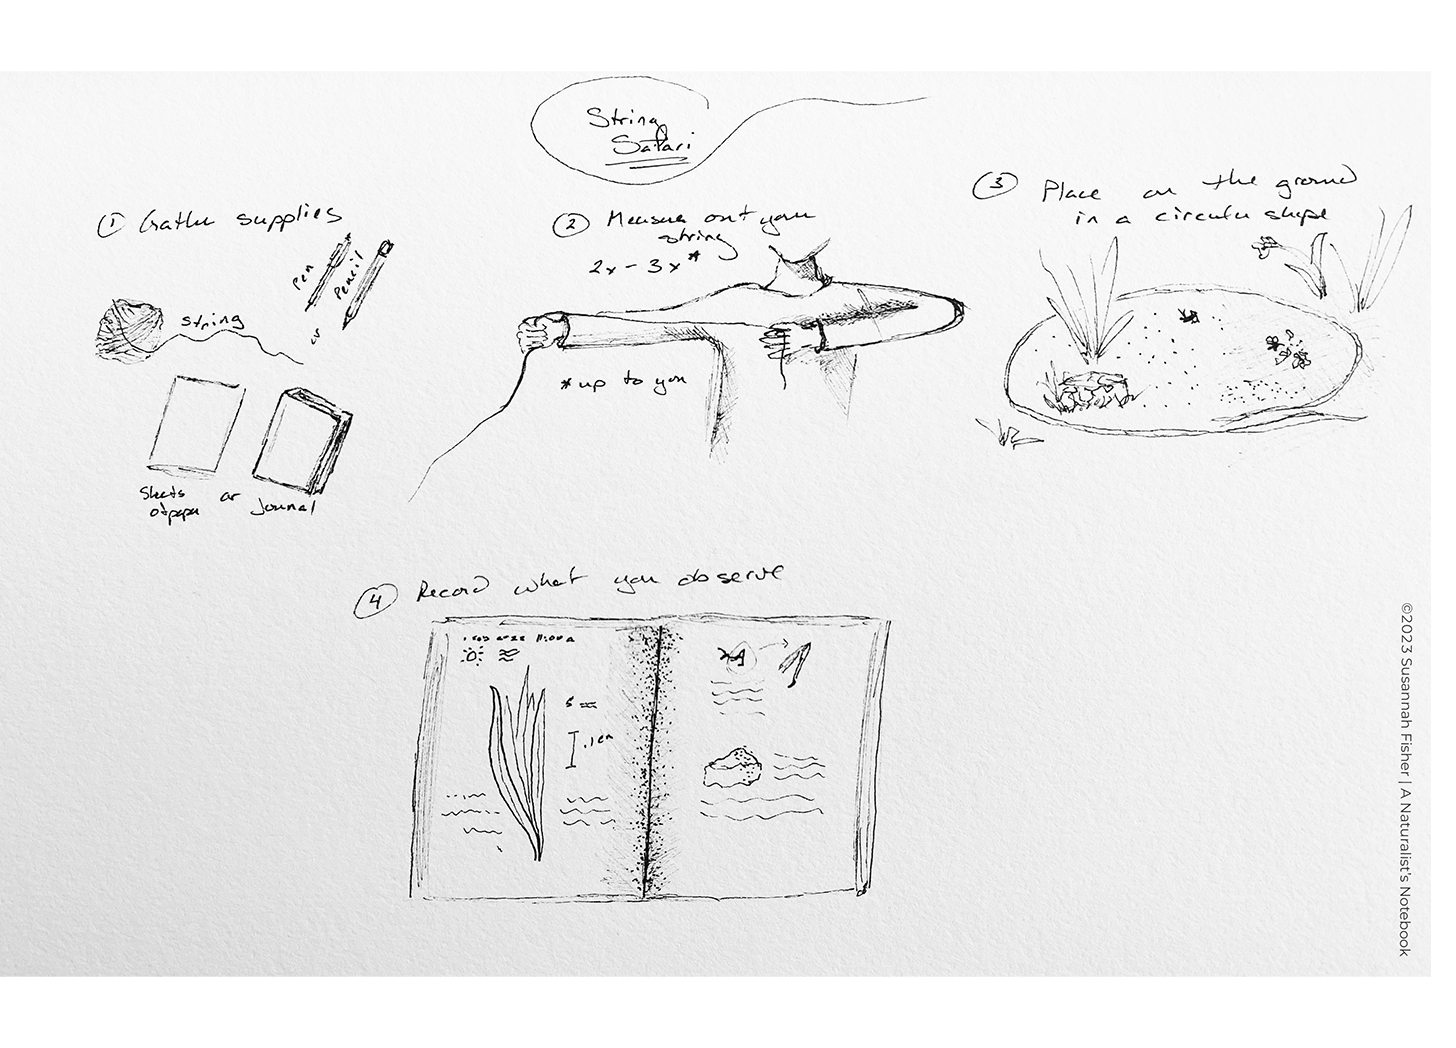 sketchbook page illustrating the steps to String Safari